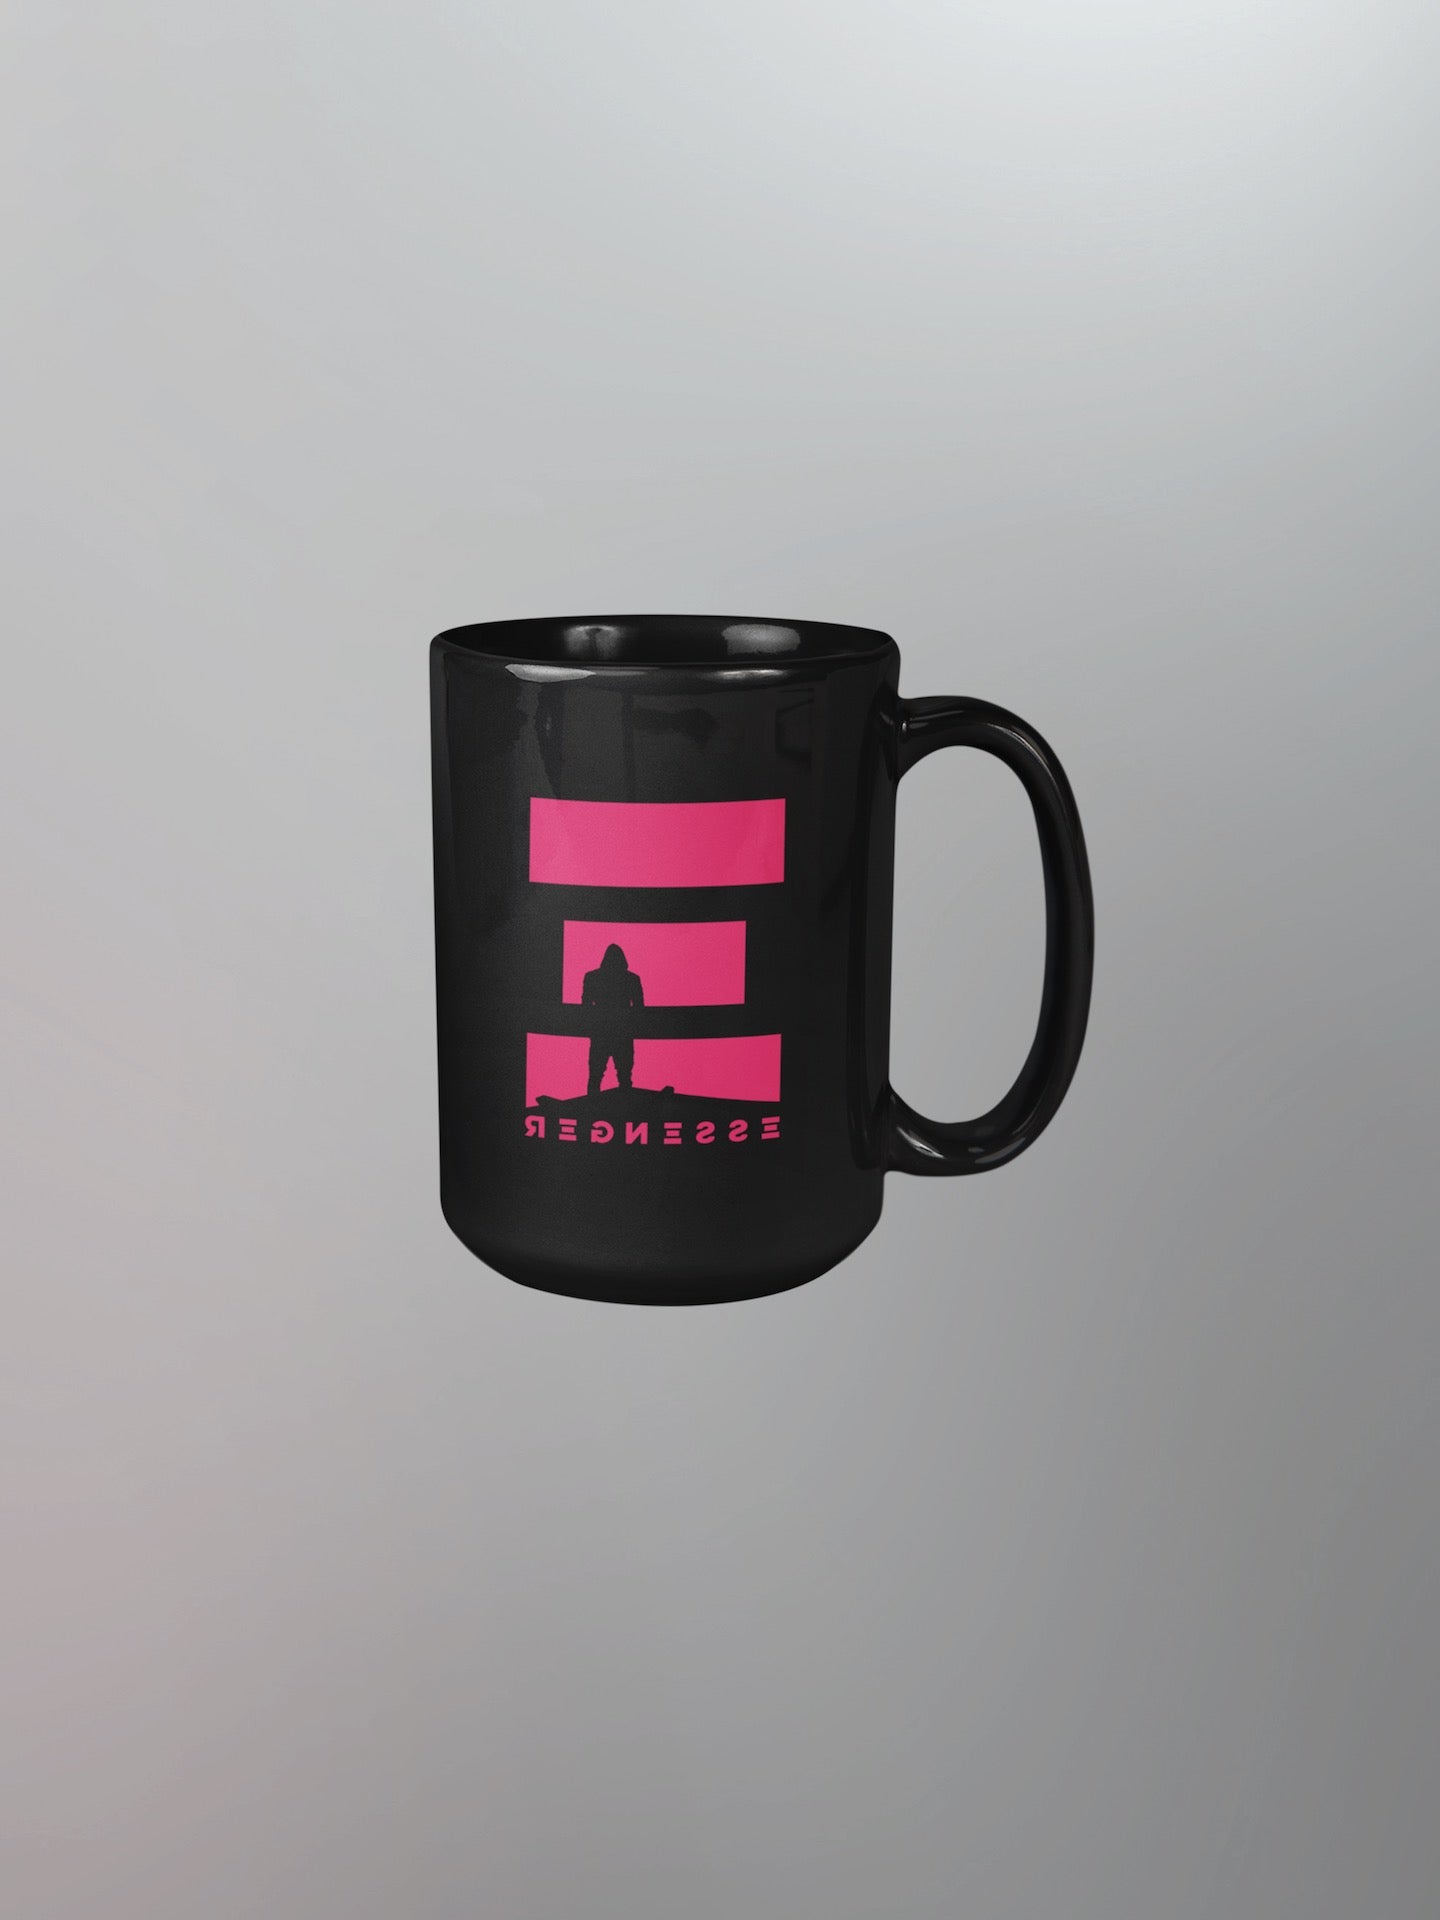 Essenger - After Dark - Coffee Mug